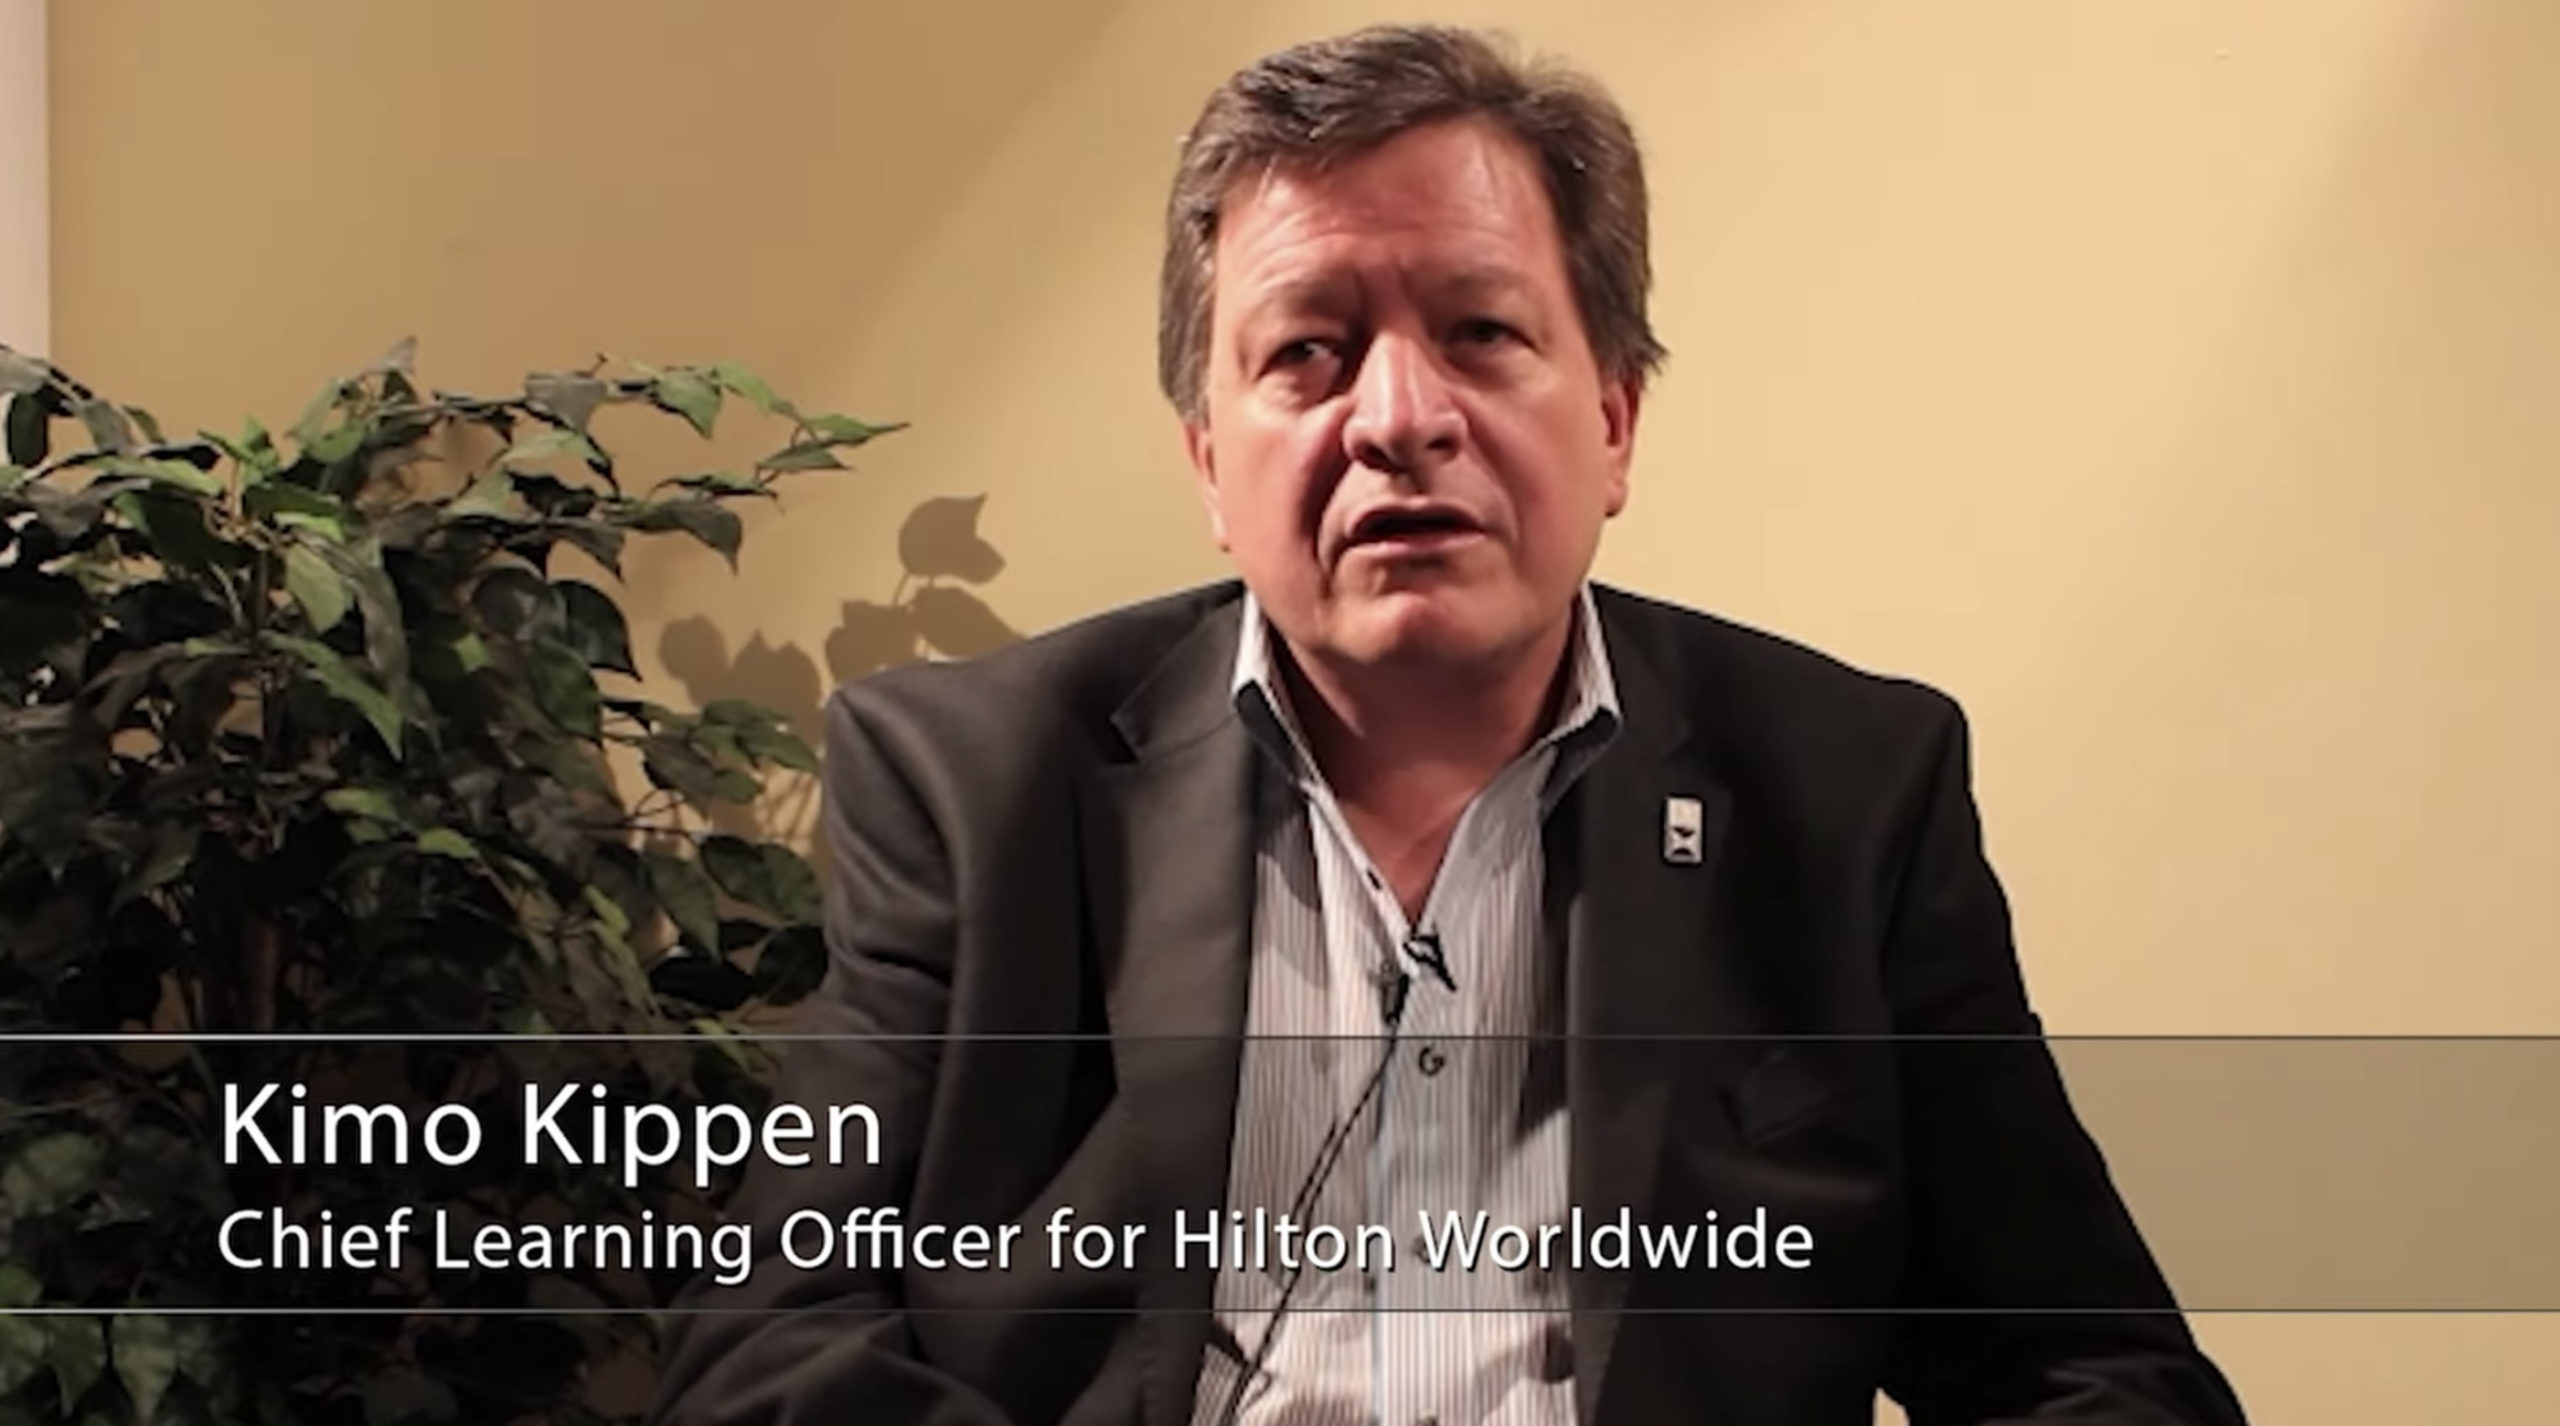 Kimo Kippen, Chief Learning Officer for Hilton Worldwide